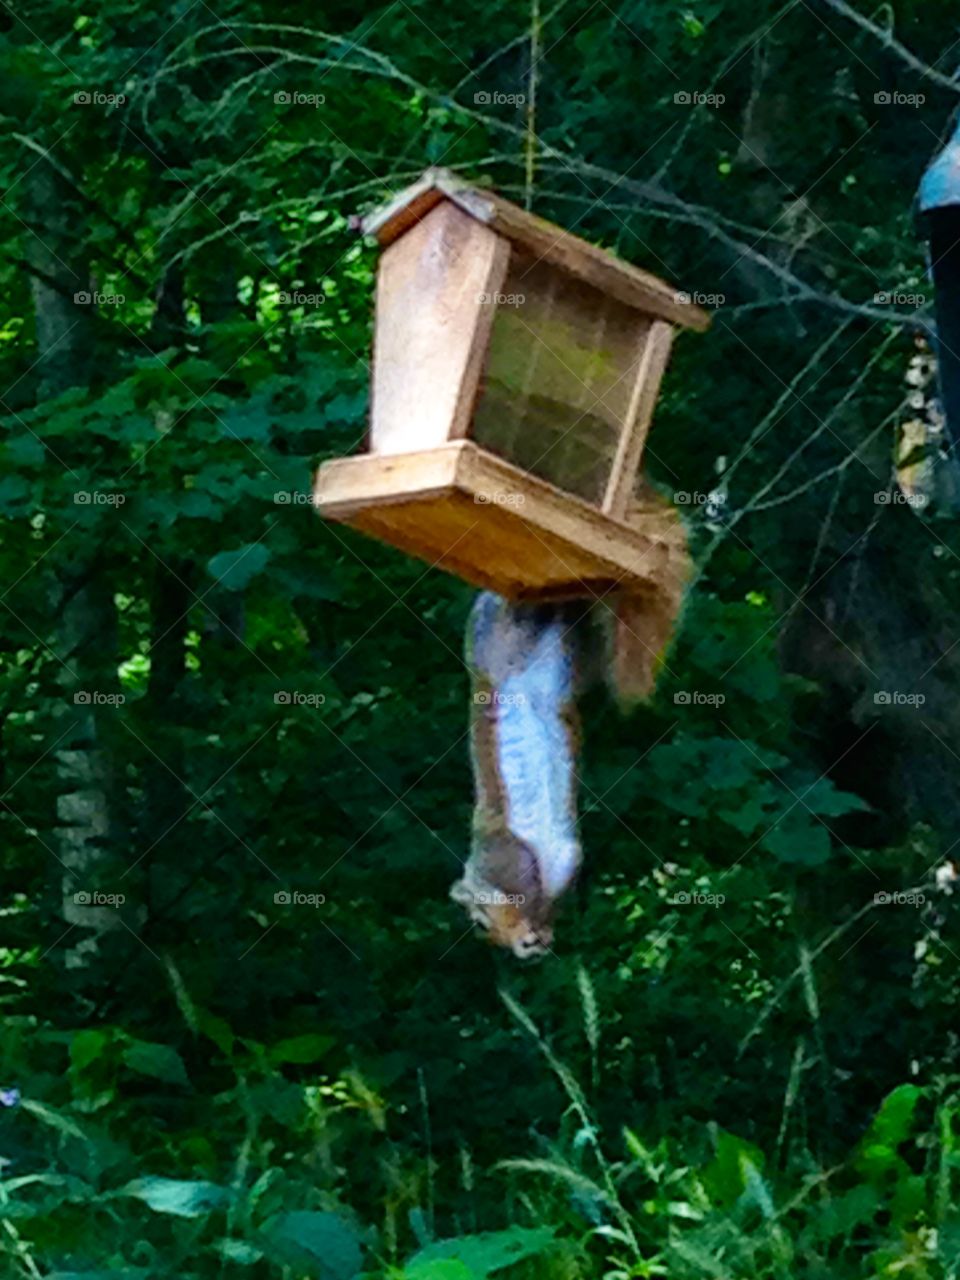 squirrel hanging upside down getting food